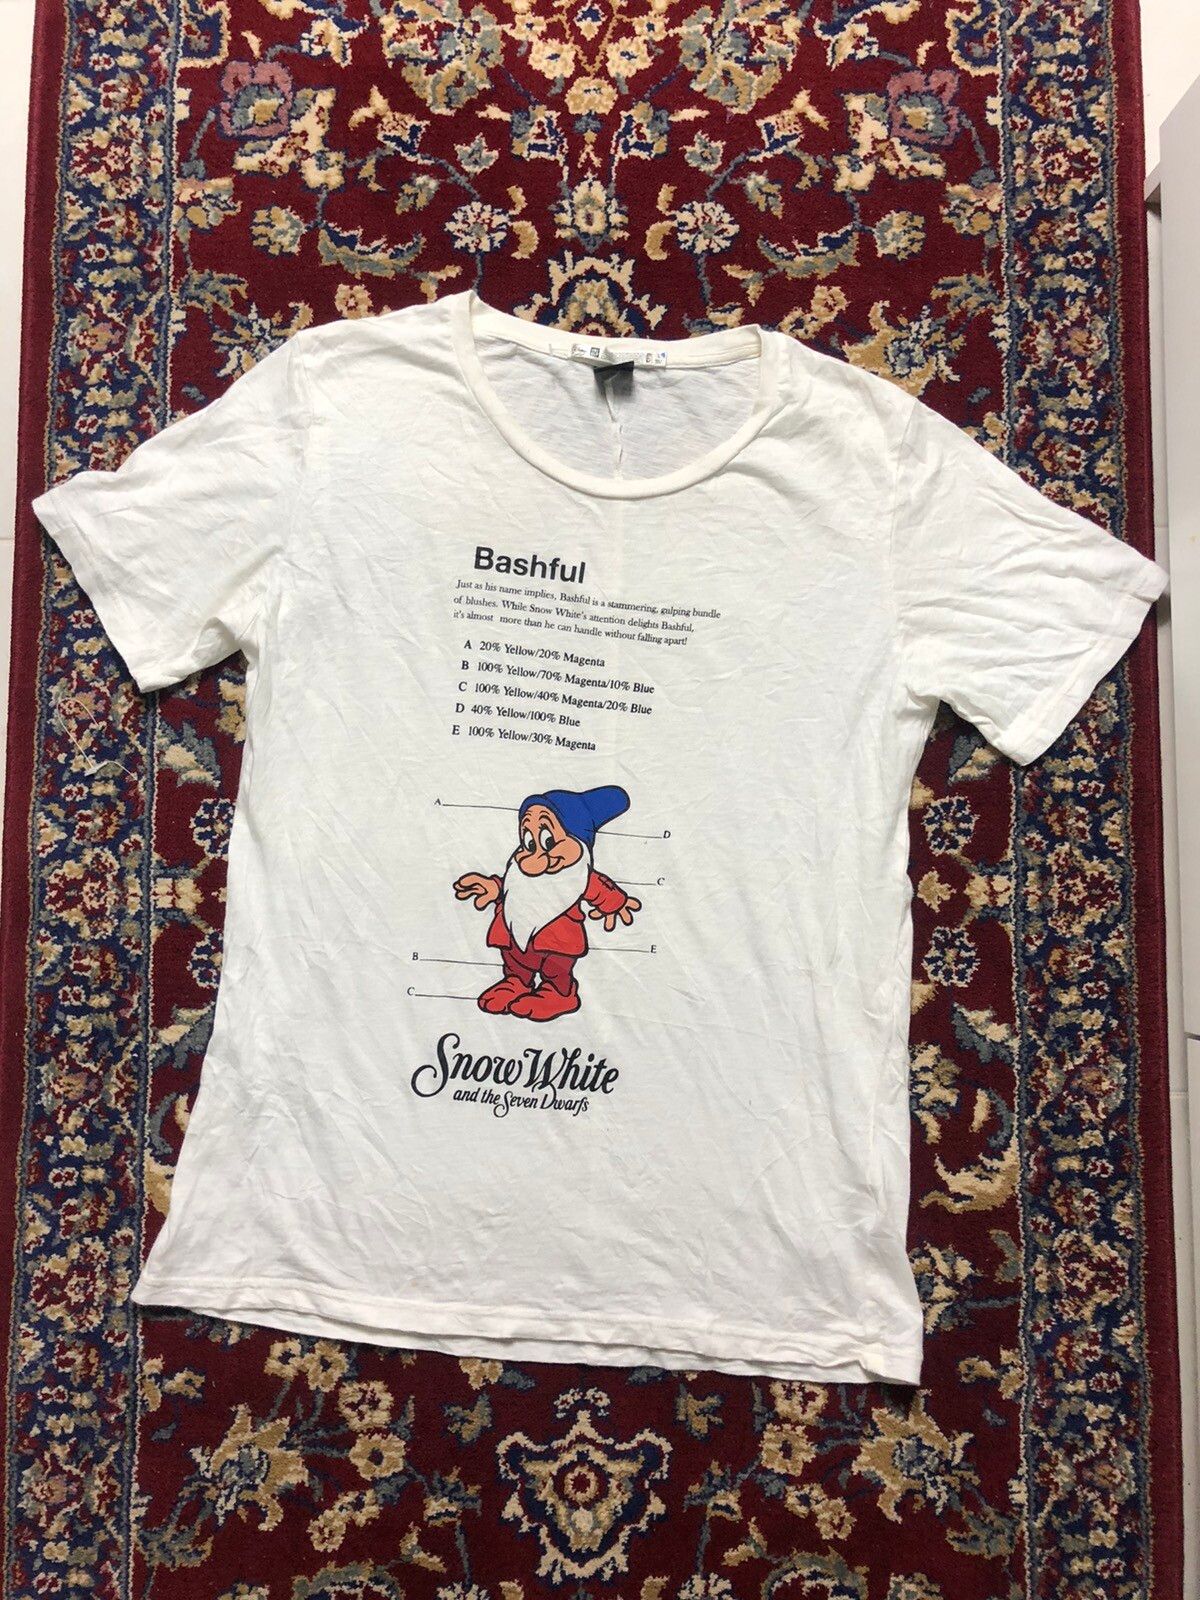 Snow White And The Seven Dwarf Uniqlo X Undercover T-Shirt - 2